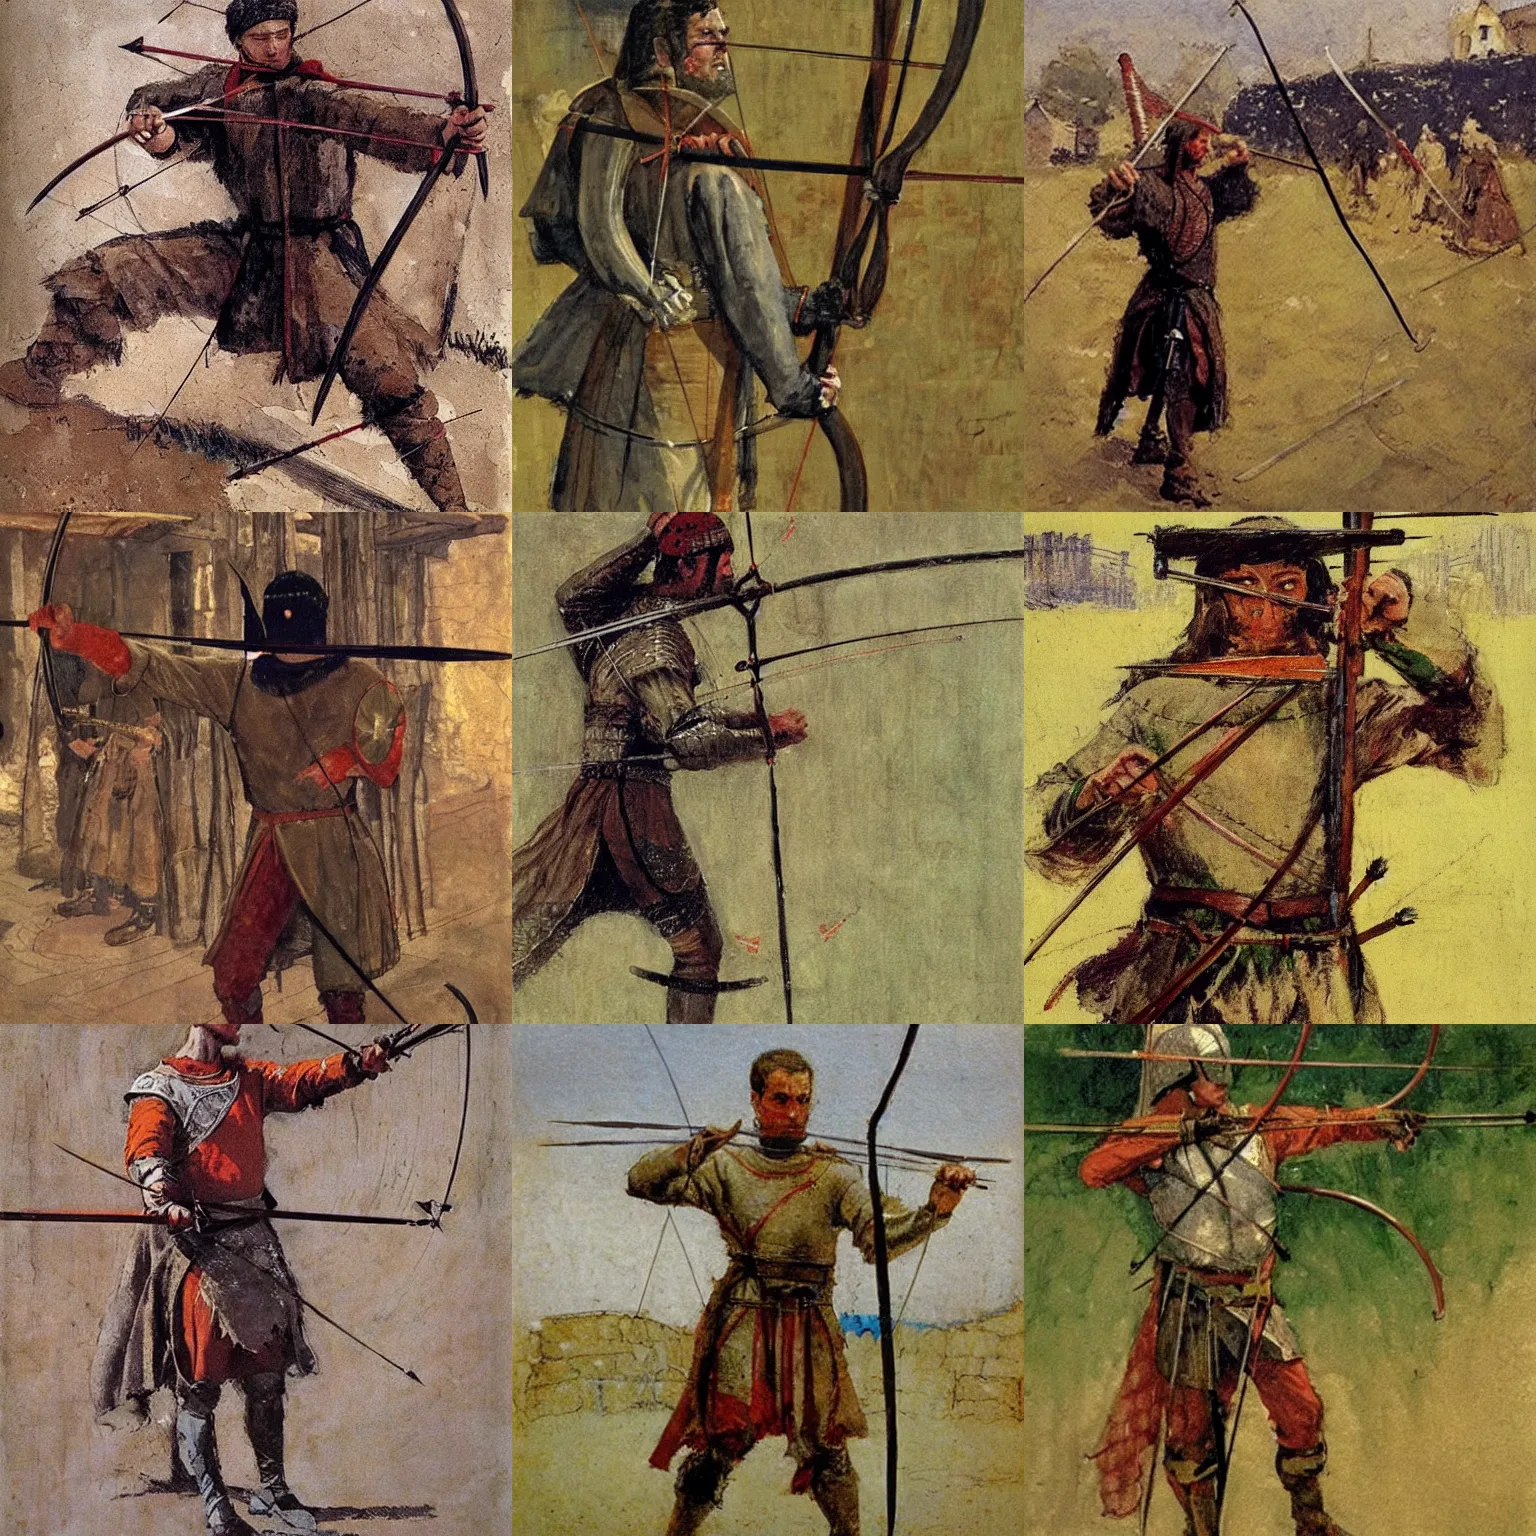 Prompt: medieval archer by bernie fuchs